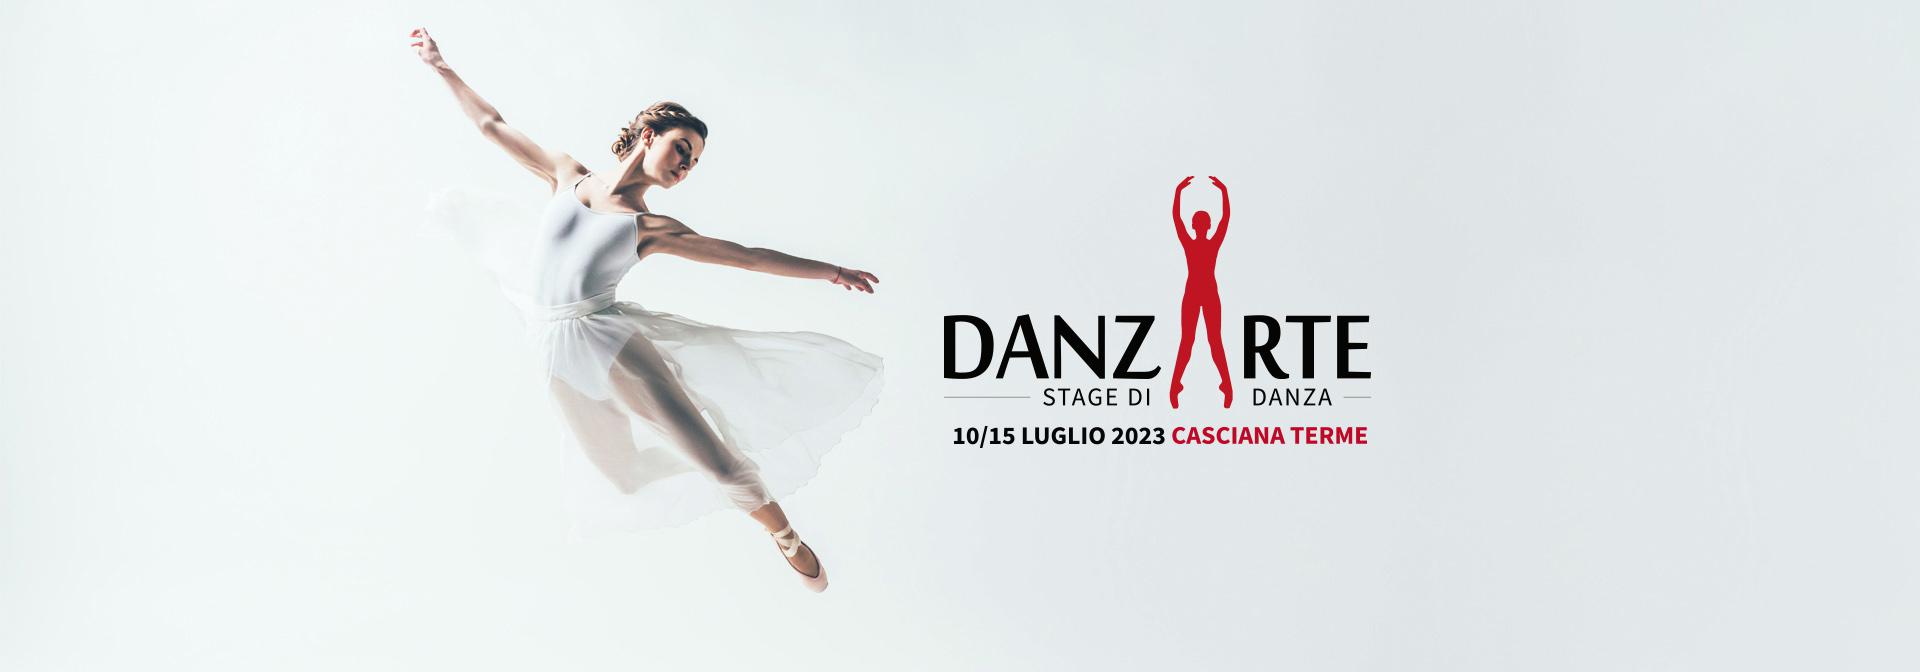 DanzArte Casciana Terme 2023